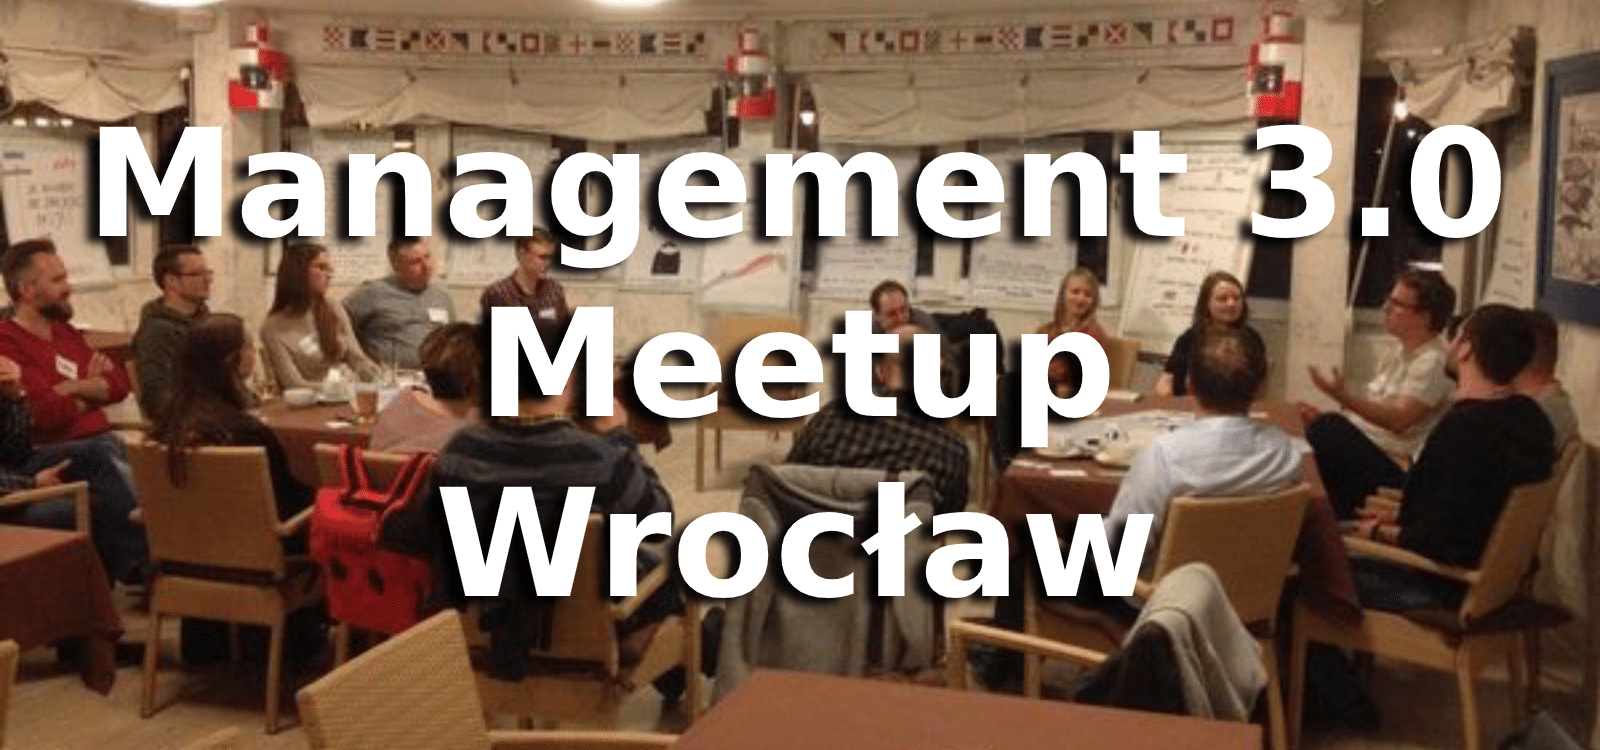 Management 3.0 Meetup Wroclaw logo